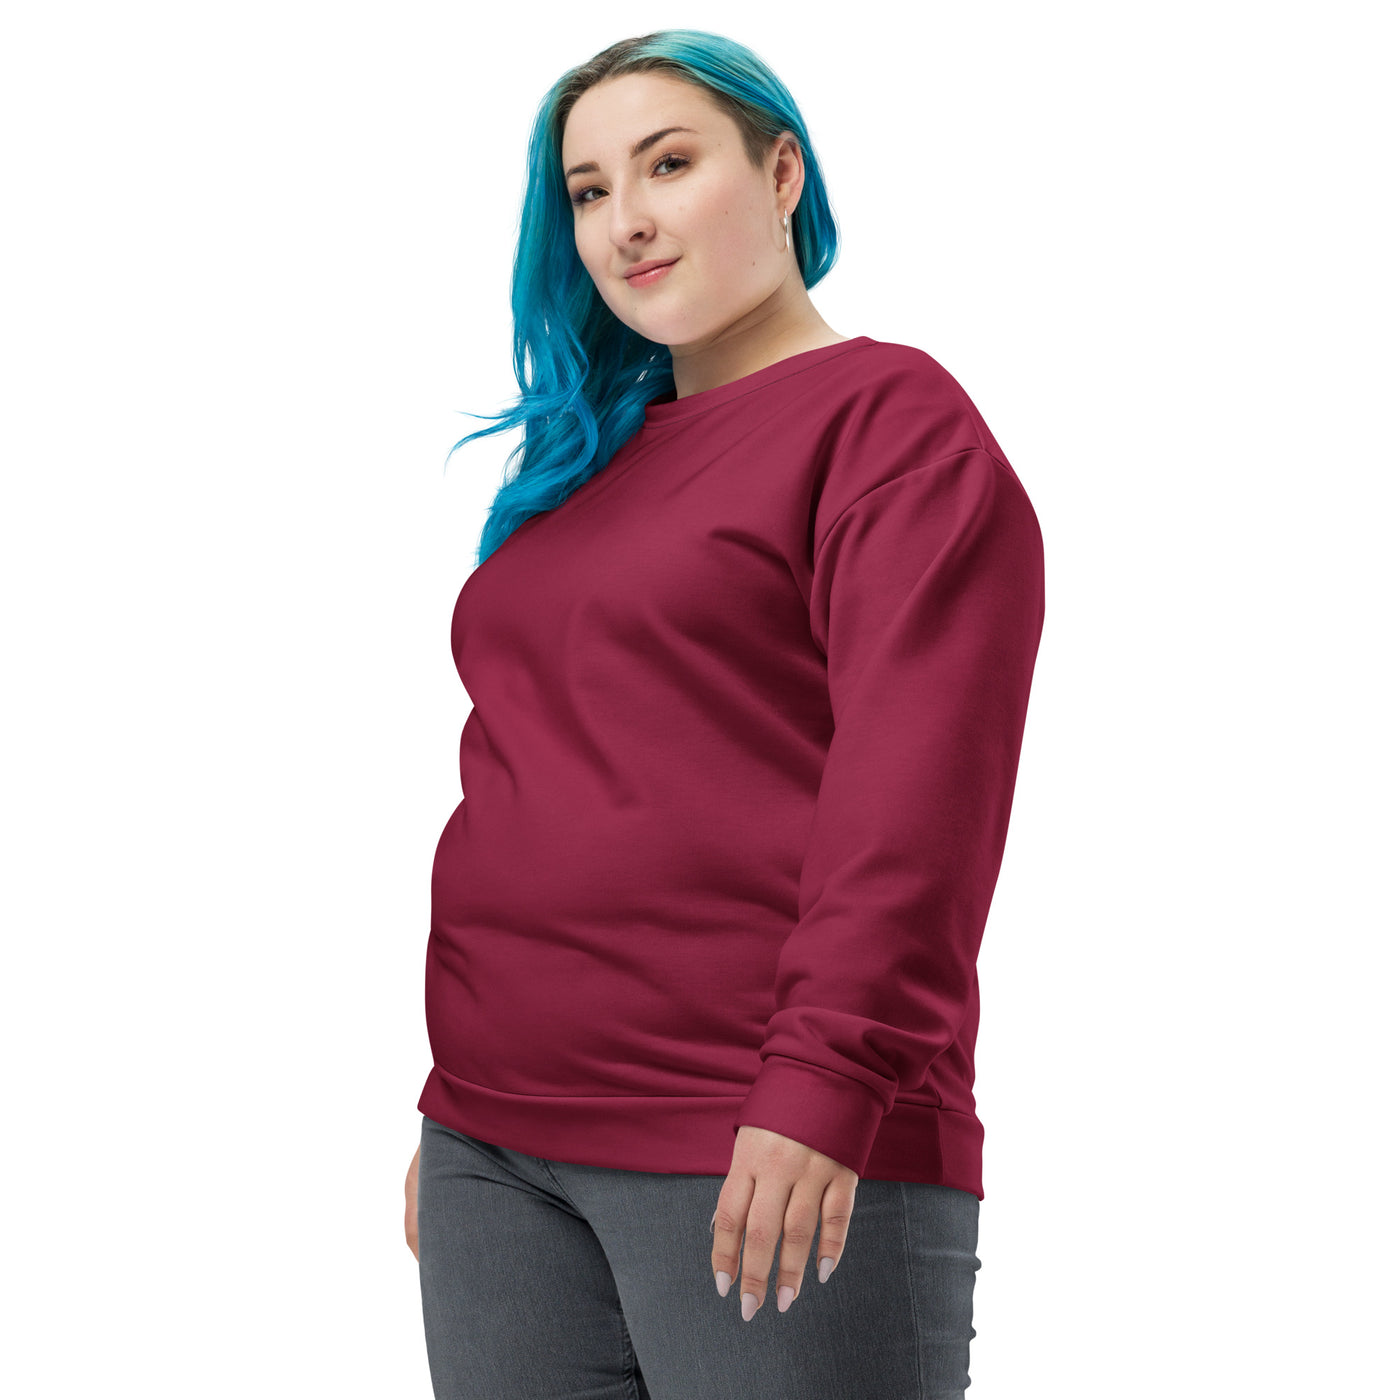 Crimson Eclipse Plus Size Sweatshirt: Stylish & Warm